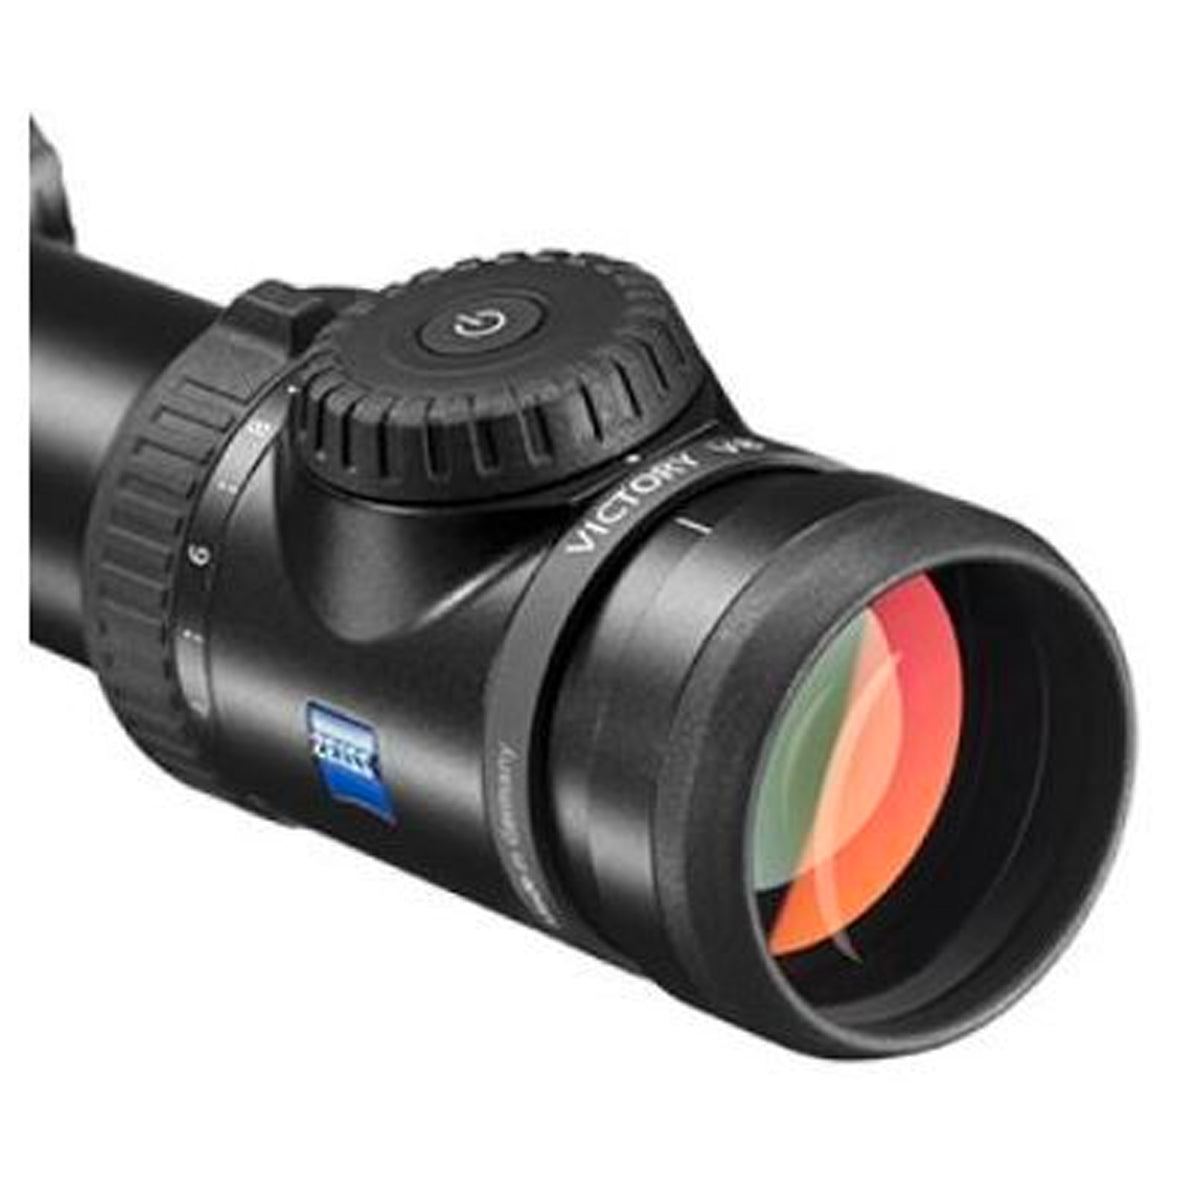 Zeiss Victory V8 1-8x30 Riflescope by Zeiss | Optics - goHUNT Shop